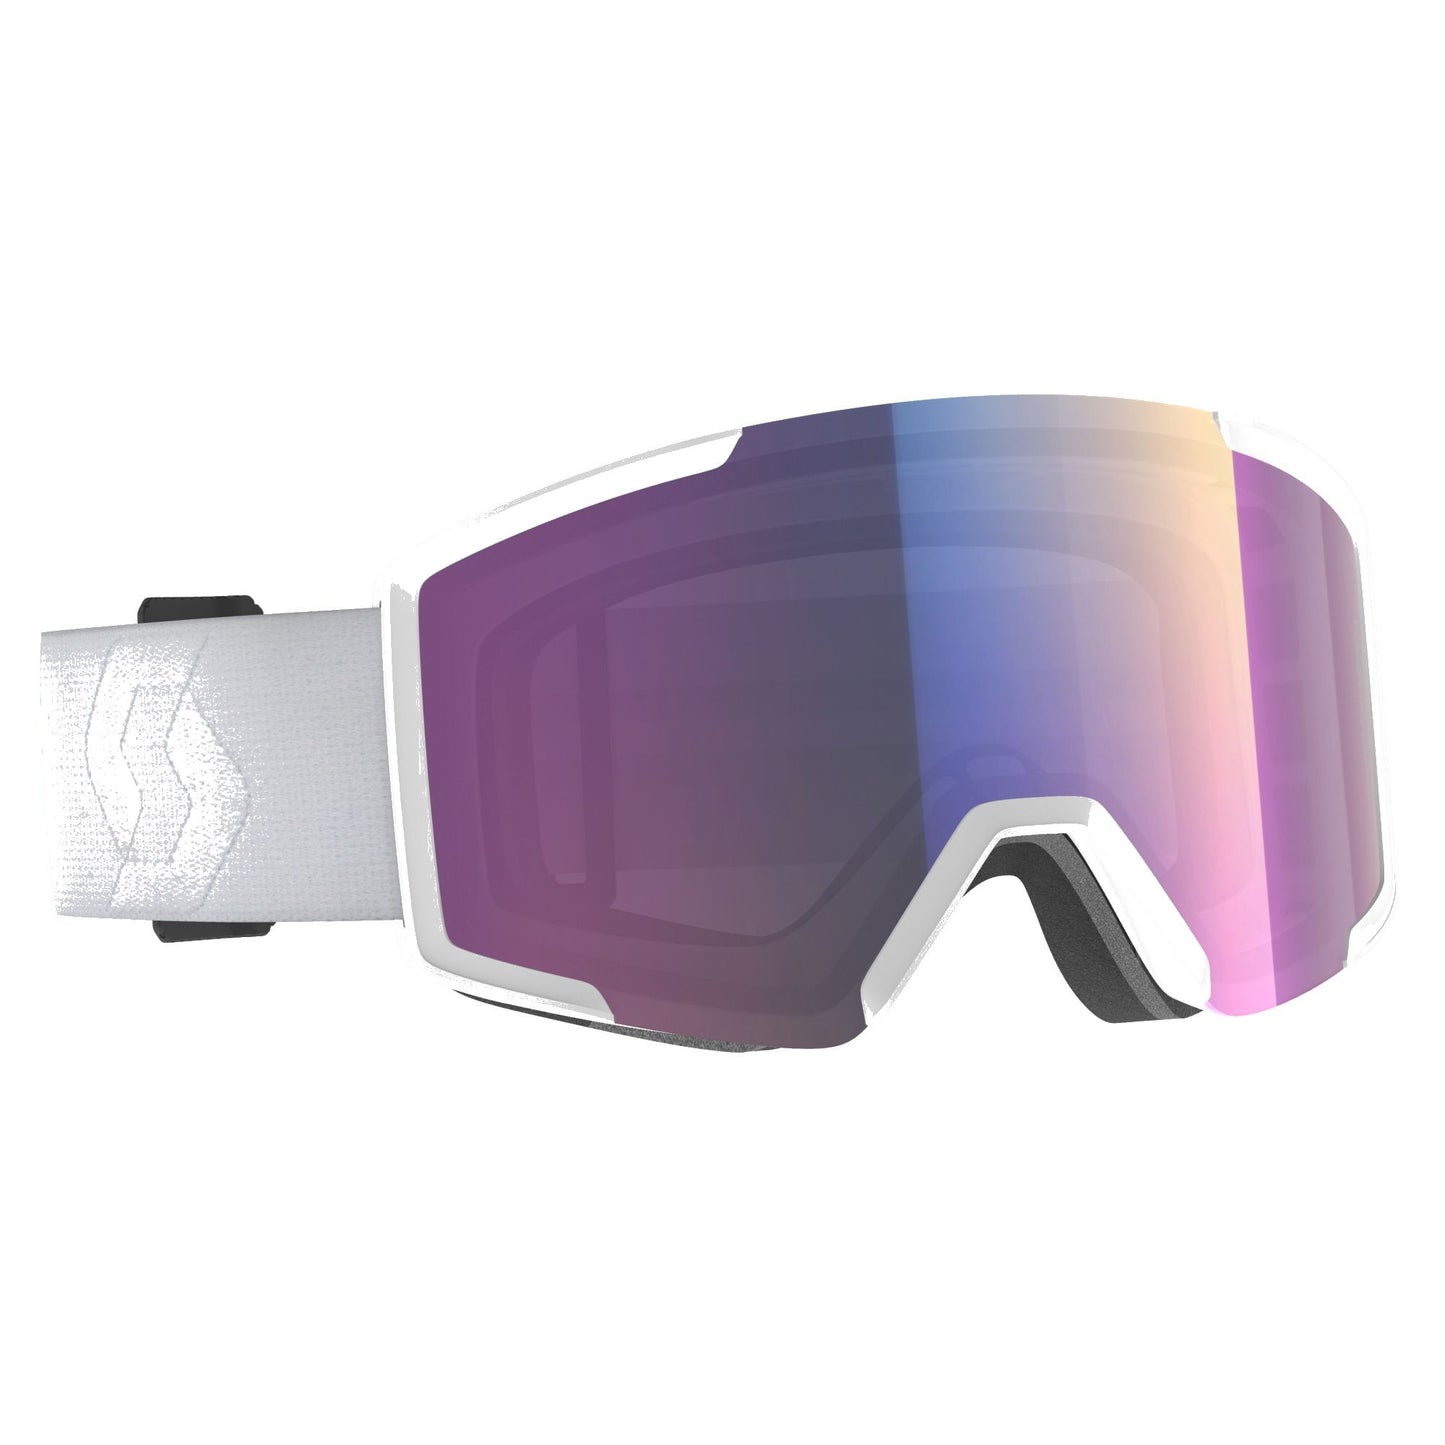 Scott Shield Snow Goggle + Extra Lens Mineral White / Enhancer Teal Chrome Snow Goggles